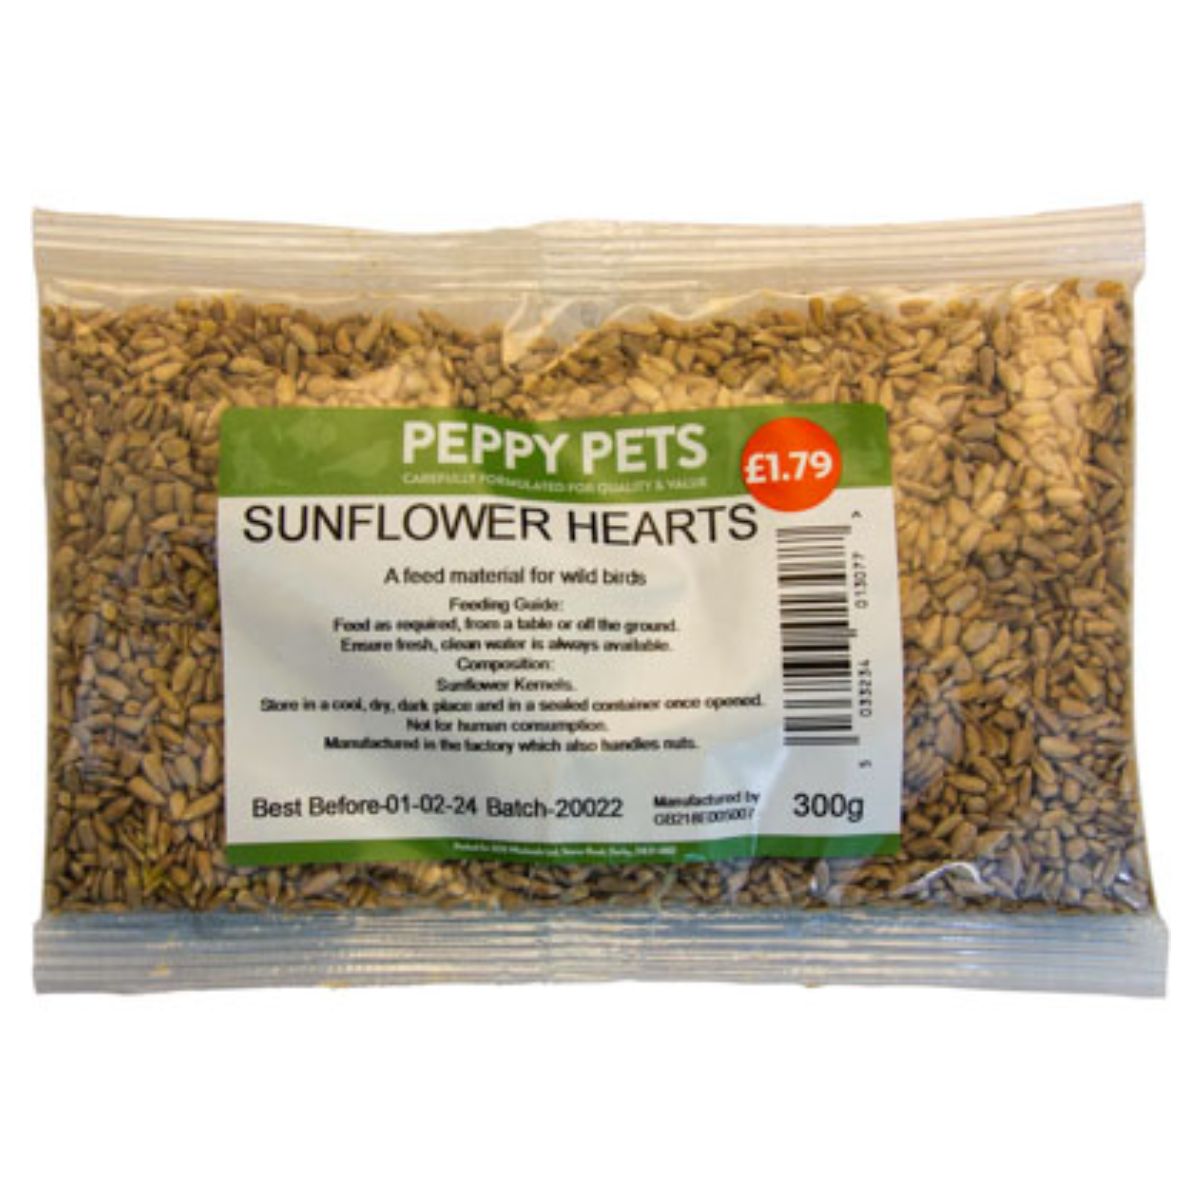 Peppy Pets - Sunflower Hearts - 300g sunflower hearts.